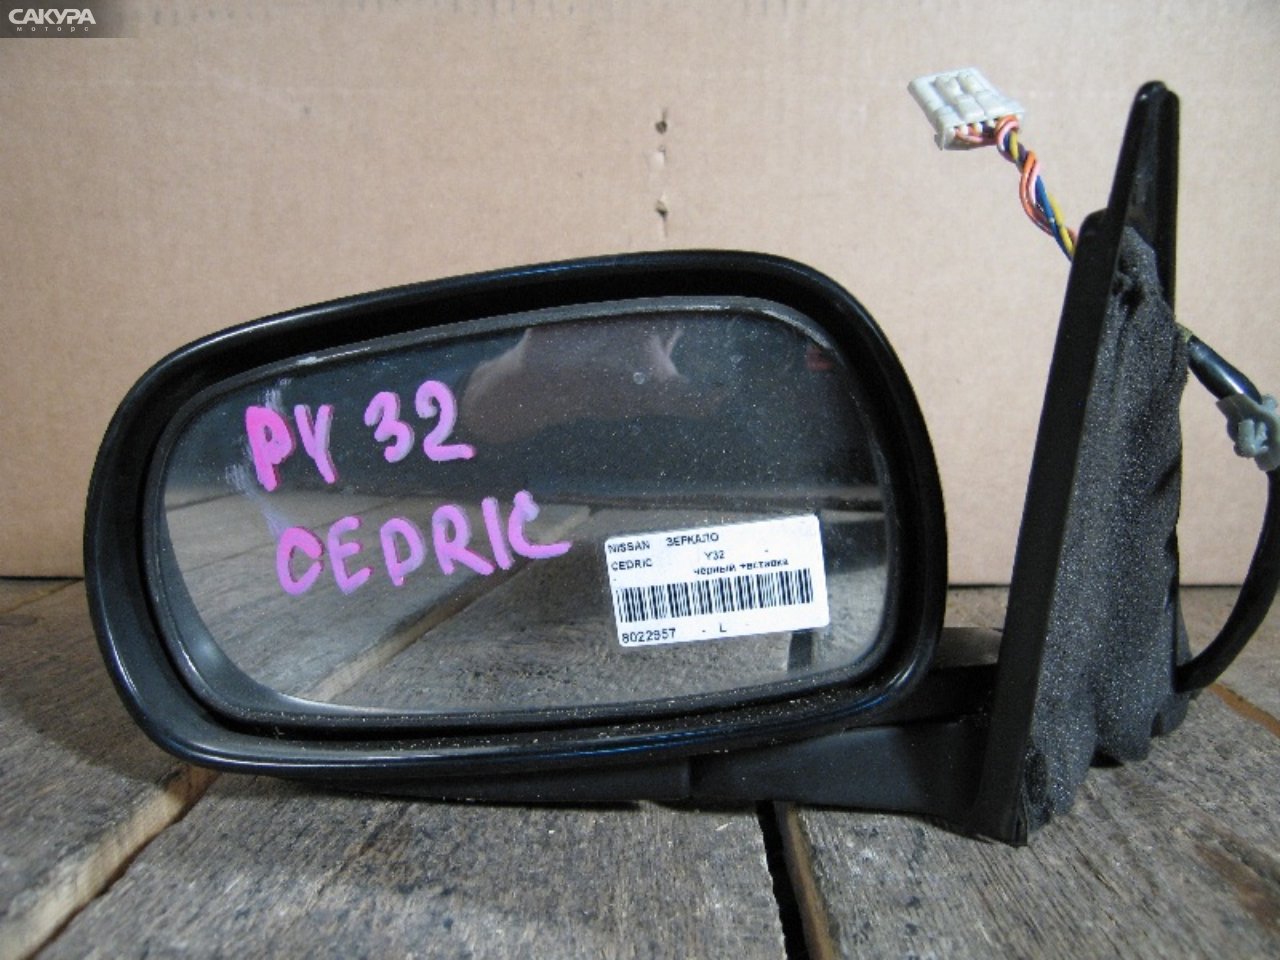 Зеркало боковое левое Nissan Cedric Y32: купить в Сакура Абакан.